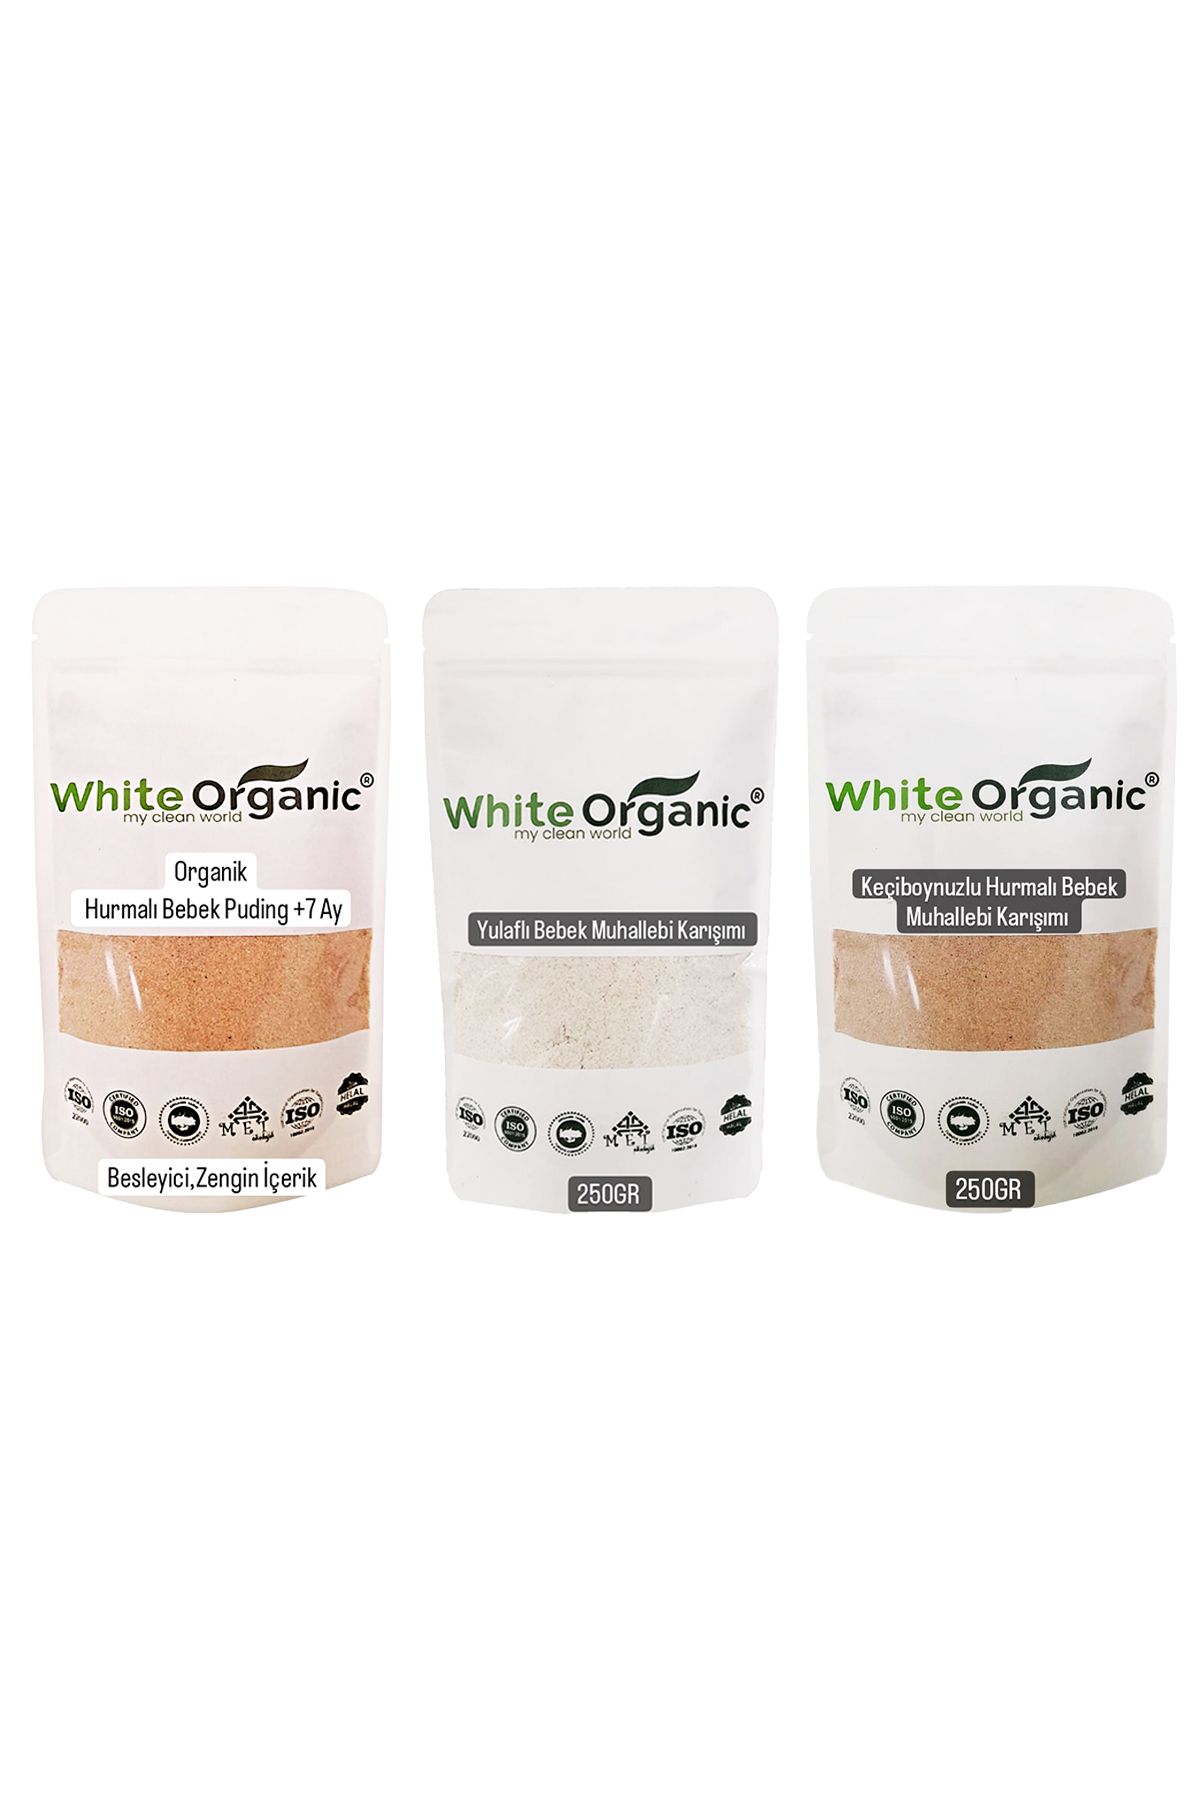 White Organic Organik Bebek Muhallebi Puding Seti (Hurmalı-Keçiboynuzlu-Yulaflı) 6-7-8-9 Ay Şeker İlavesiz